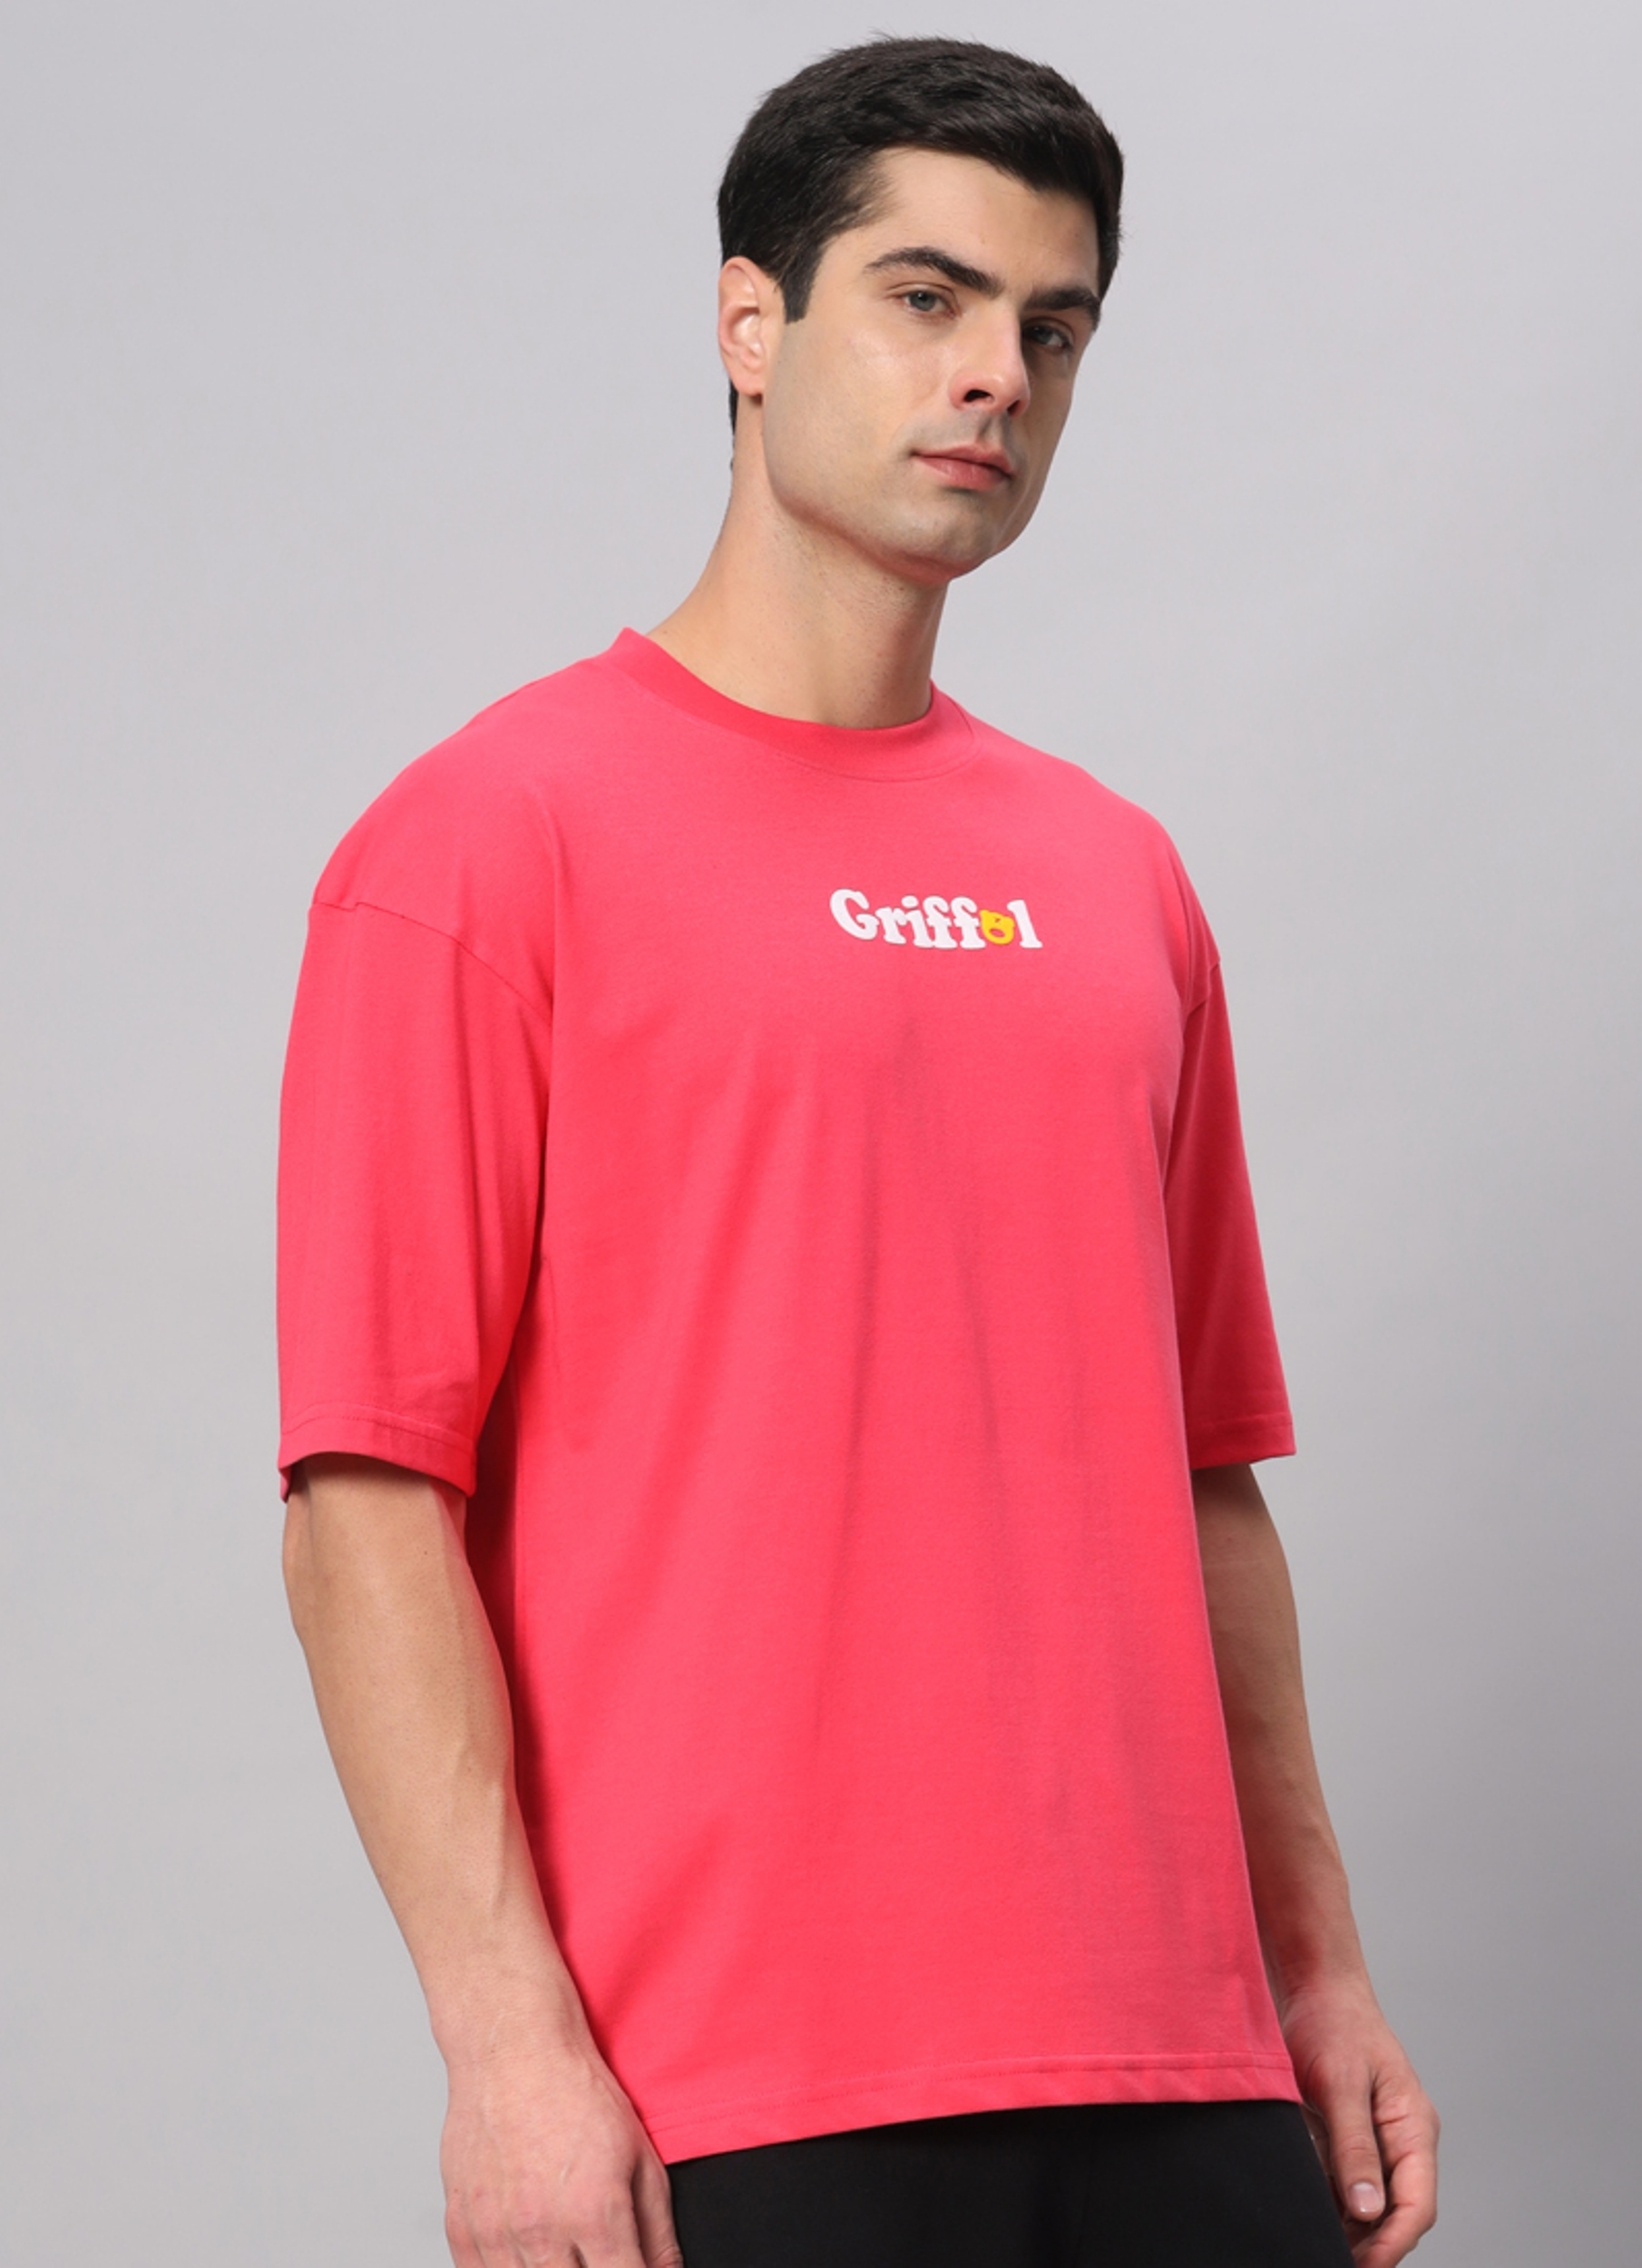 Men's Pink Cotton Loose Printed   Activewear T-Shirts